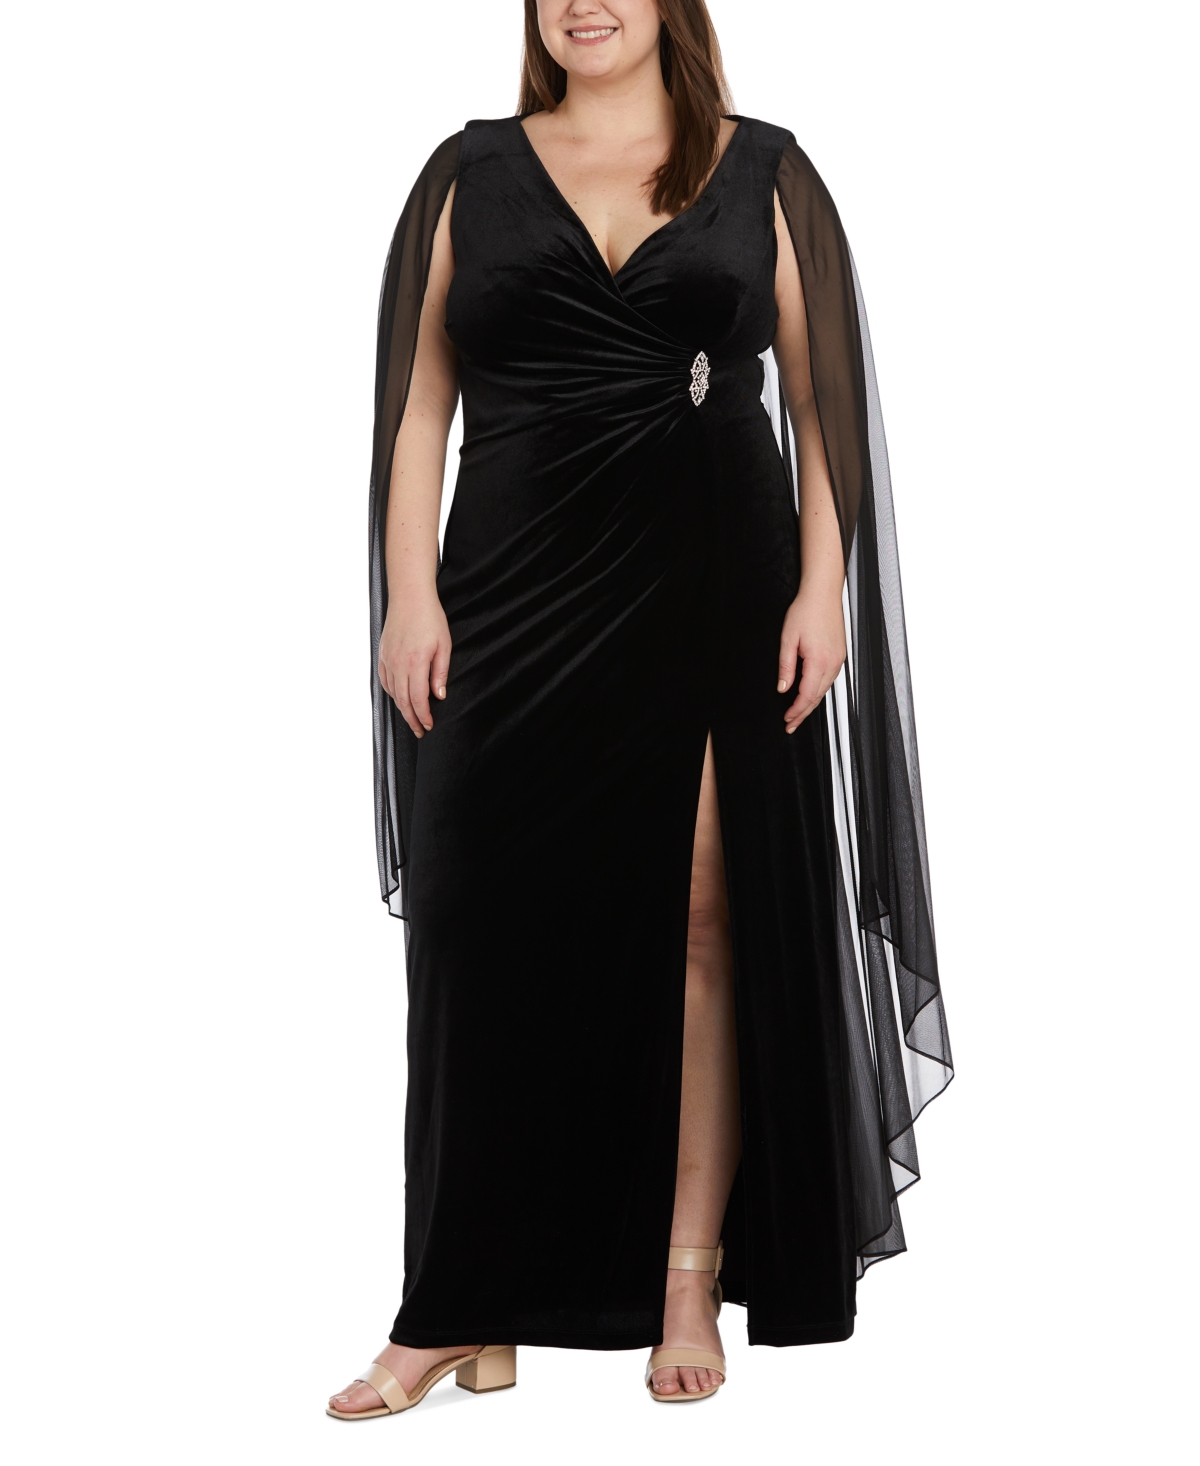 1950s Plus Size Dresses, Swing Dresses R  M Richards Plus Size Draped-Shoulder Side-Ruched Gown - Black $129.00 AT vintagedancer.com